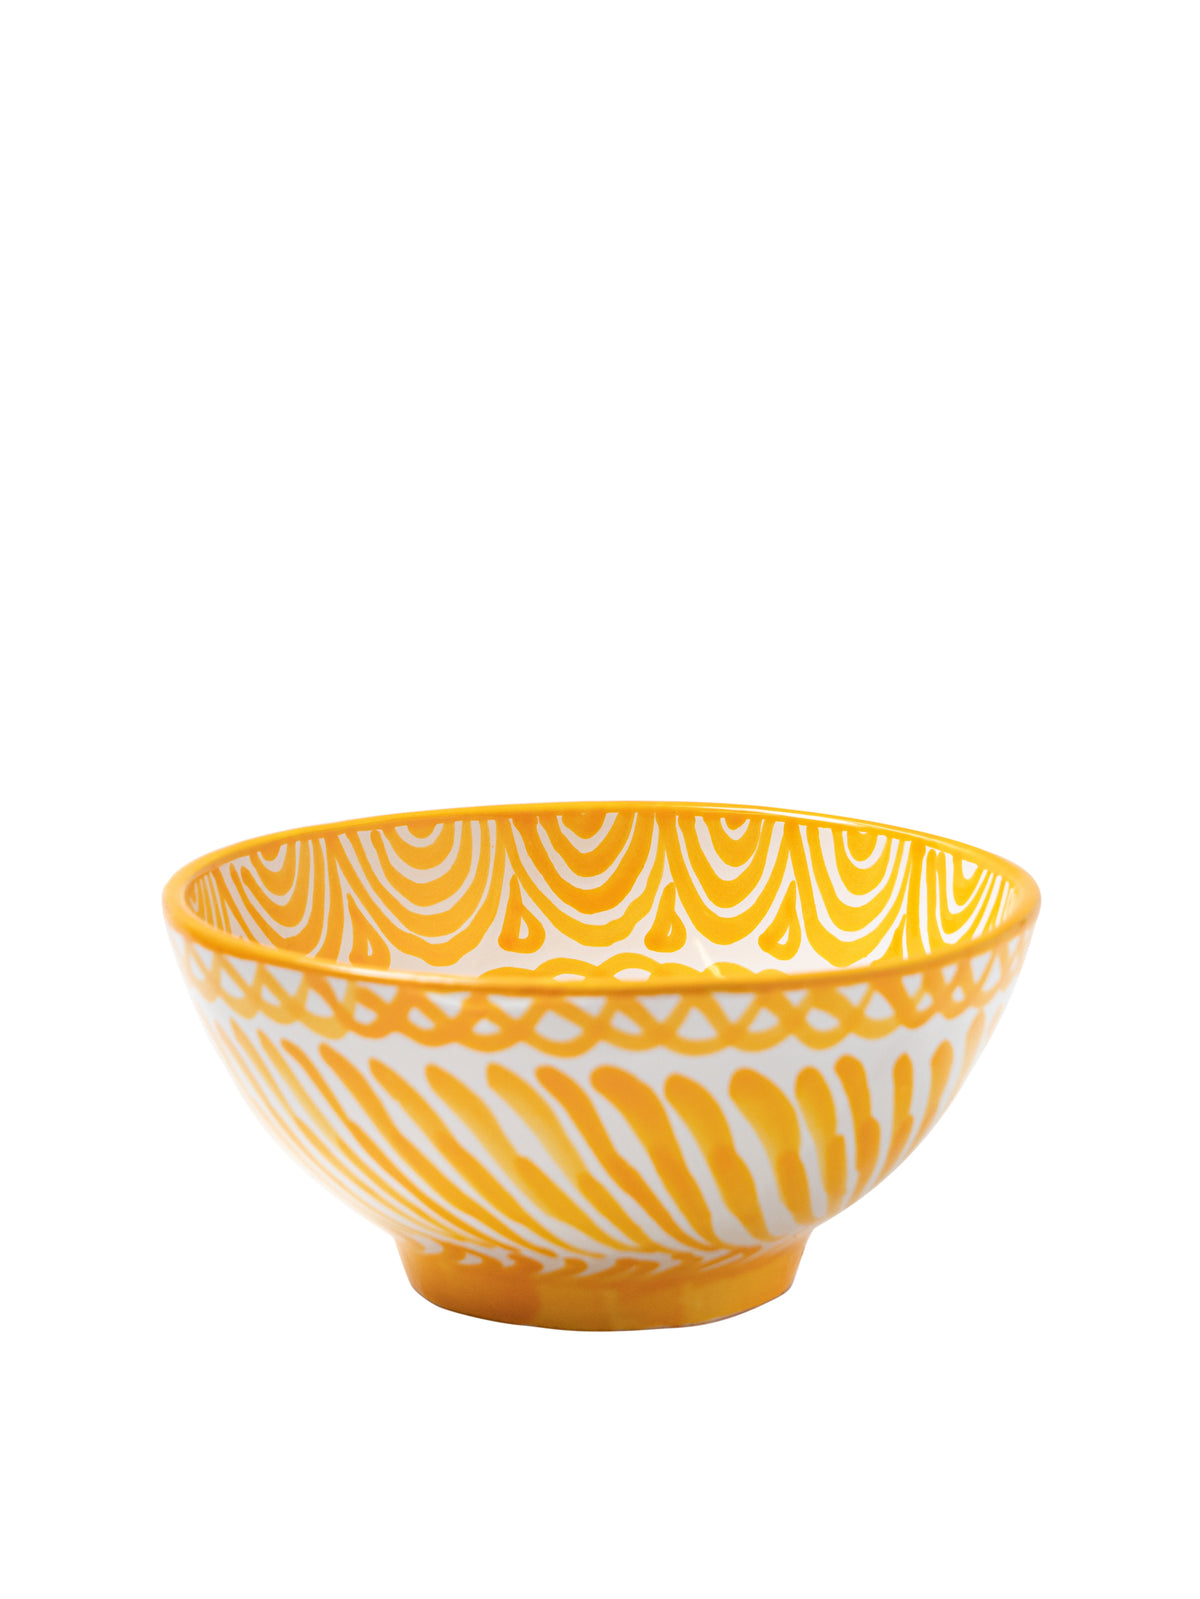 Casa Amarilla Medium Bowl with Hand-painted Designs